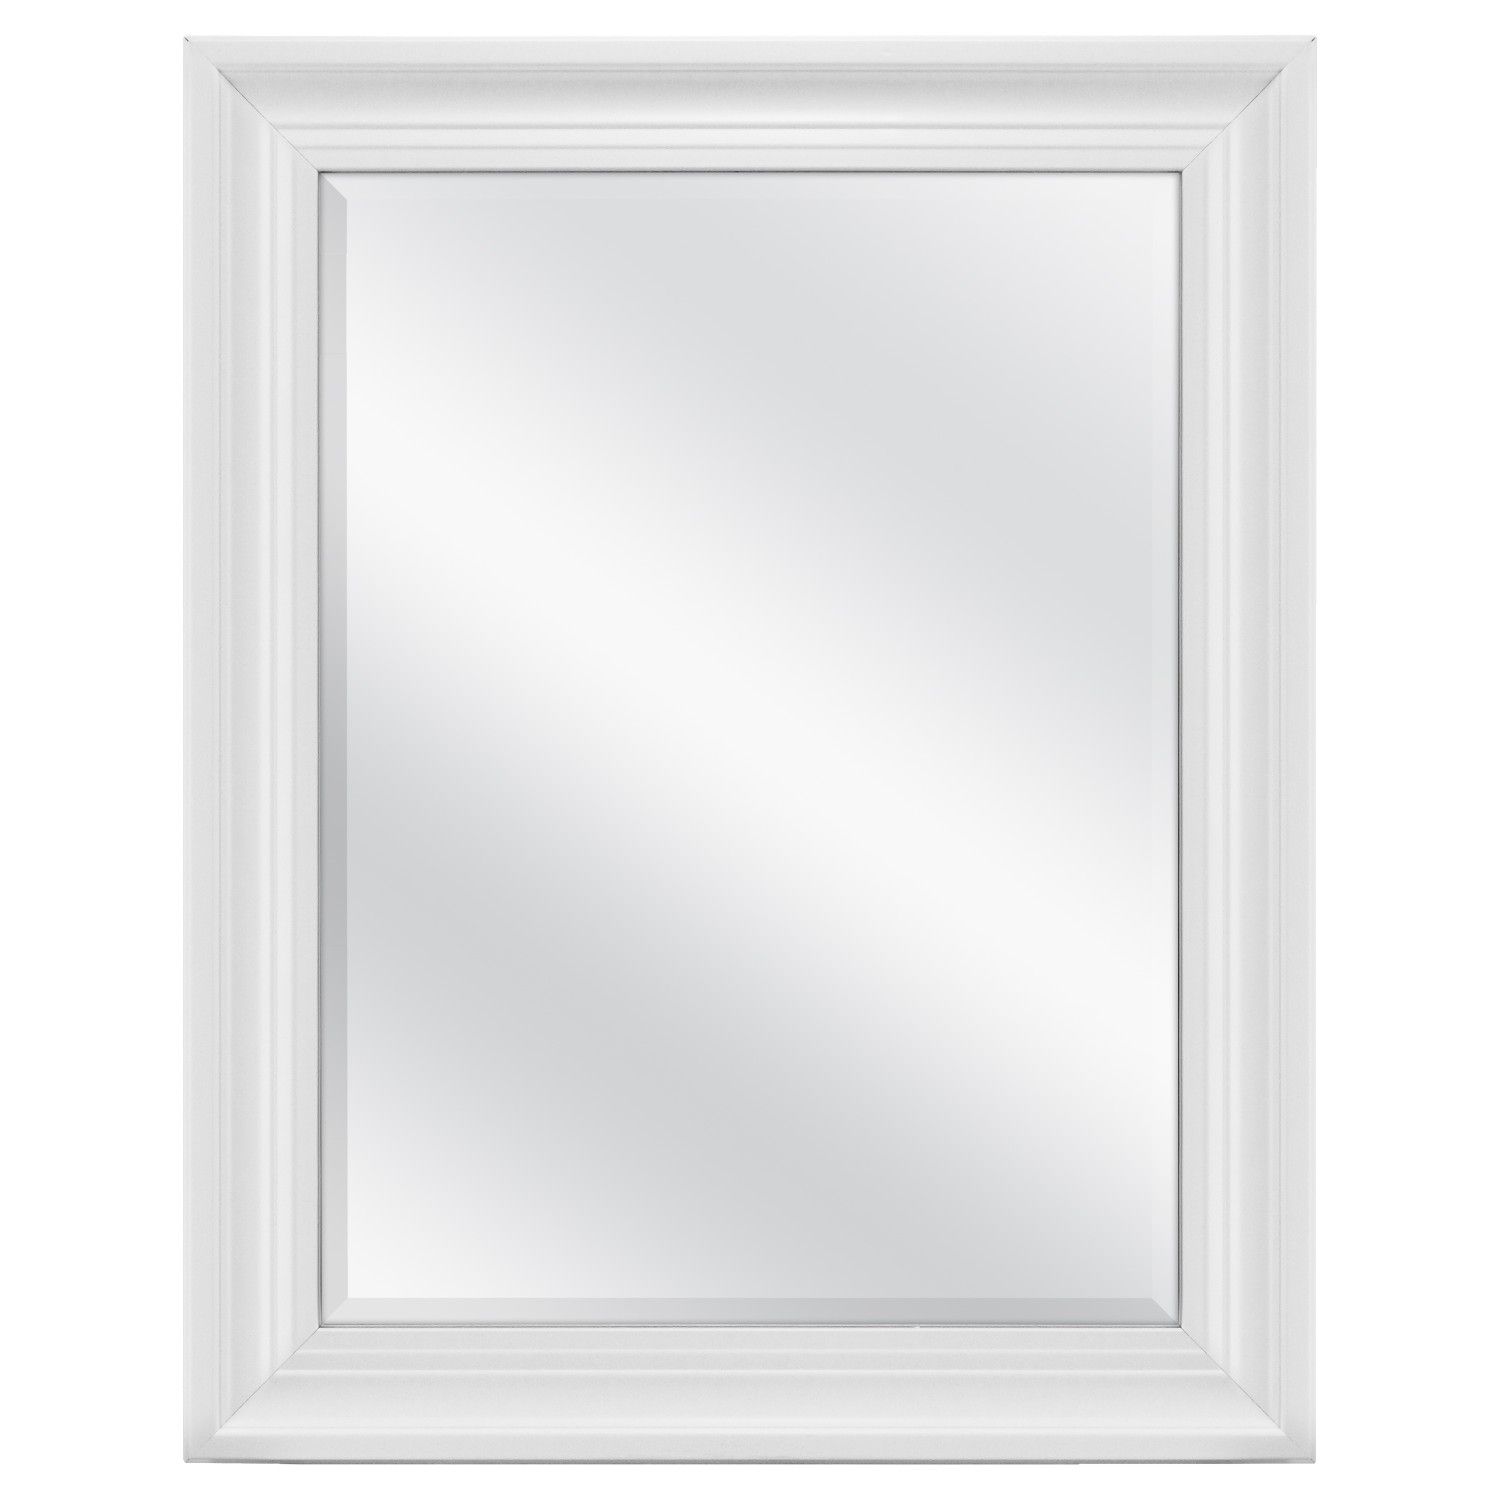 Mainstays Beveled Wall Mirror, 23" x 29", white 31b